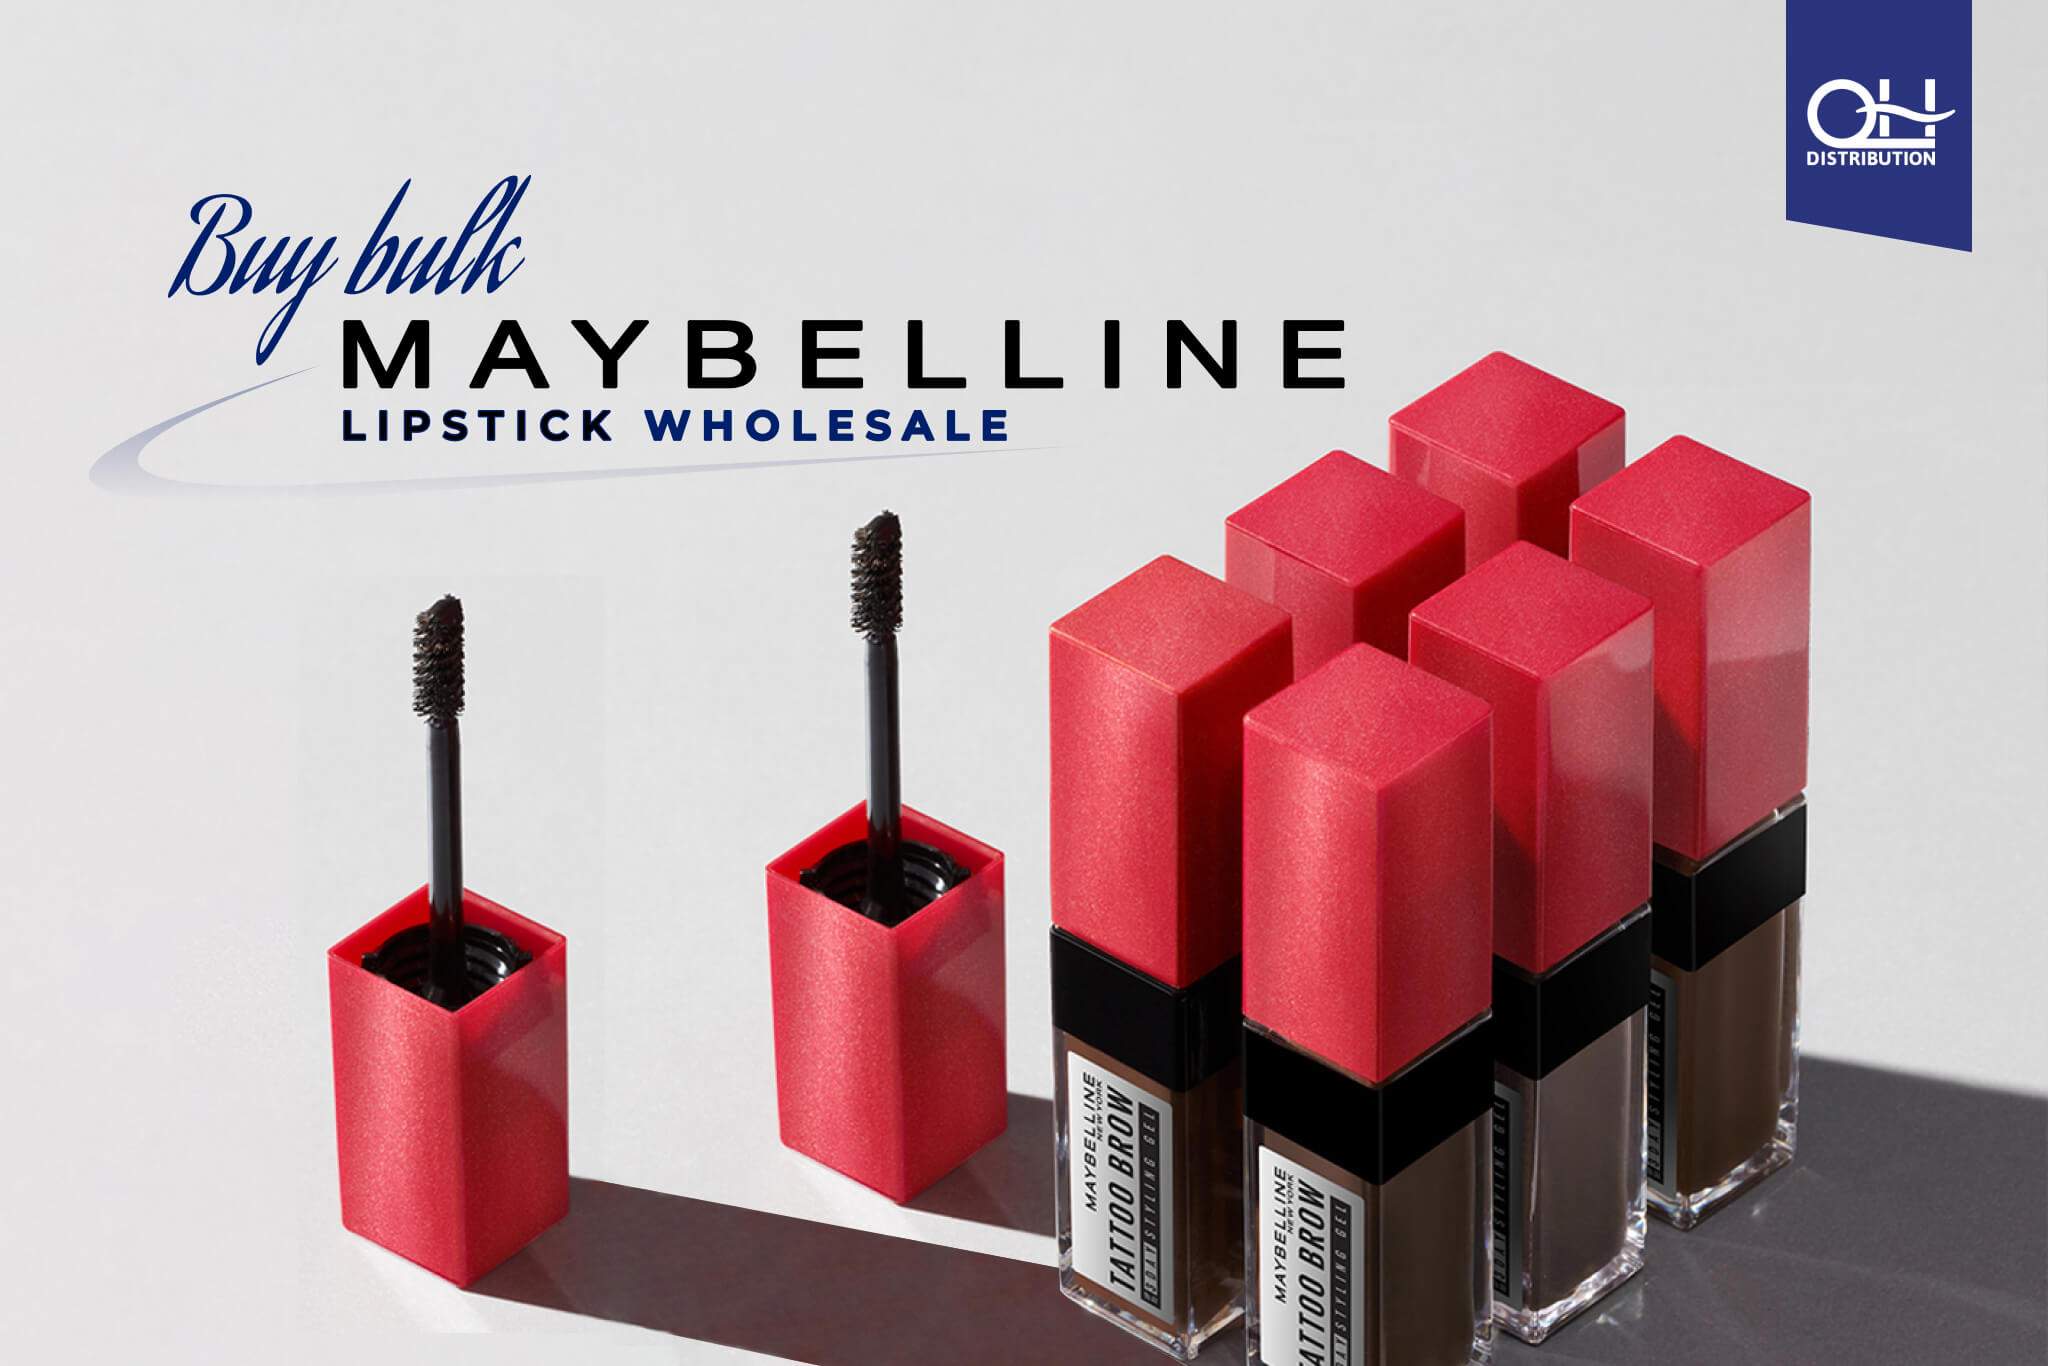 Maybelline Lipstick Wholesale